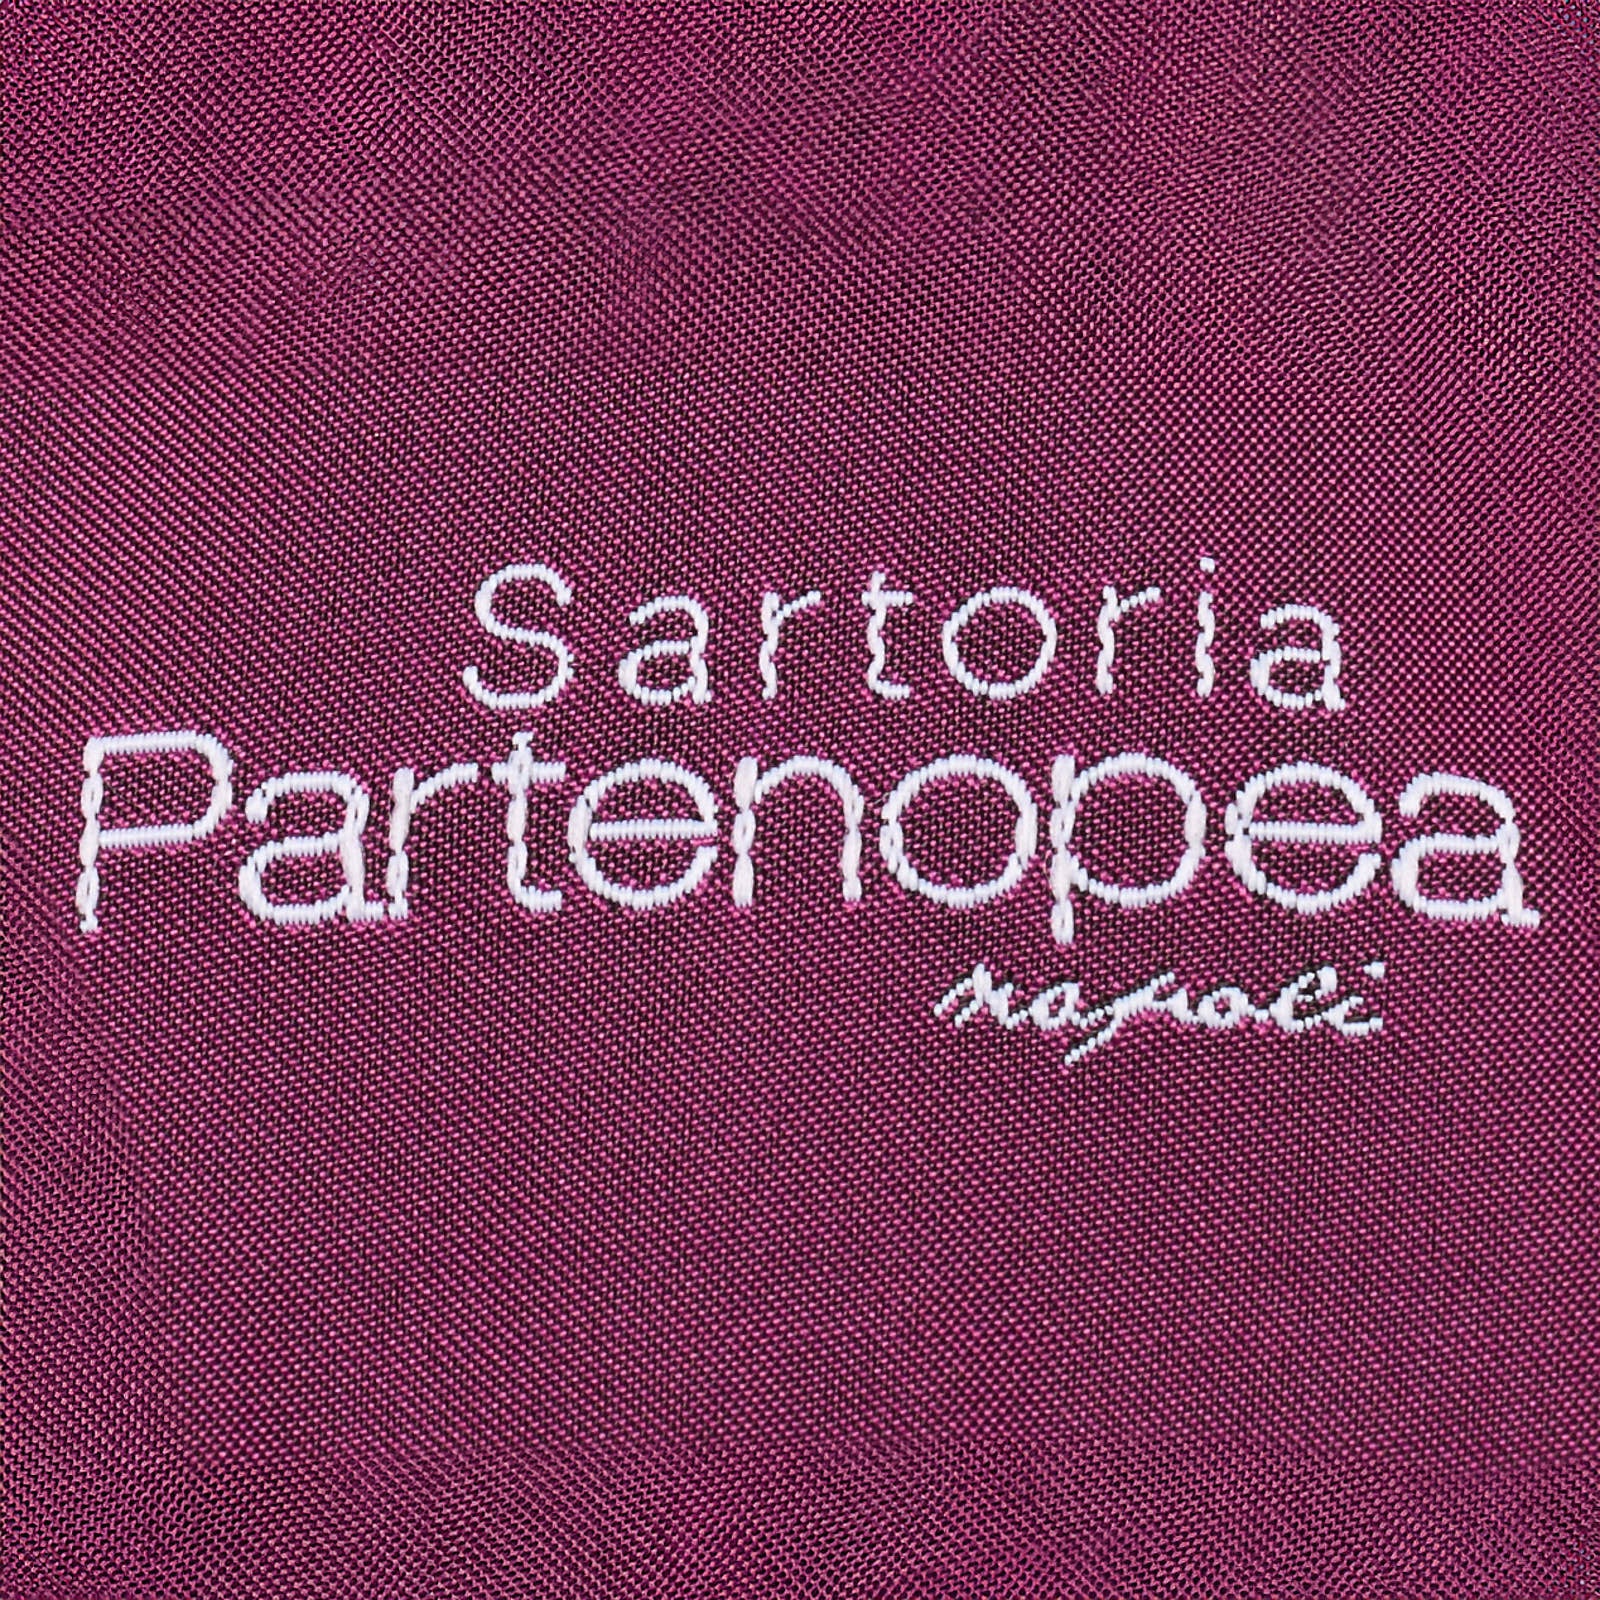 SARTORIA PARTENOPEA for DRINKWATER'S Gray Windowpane Linen Jacket NEW  Current Model